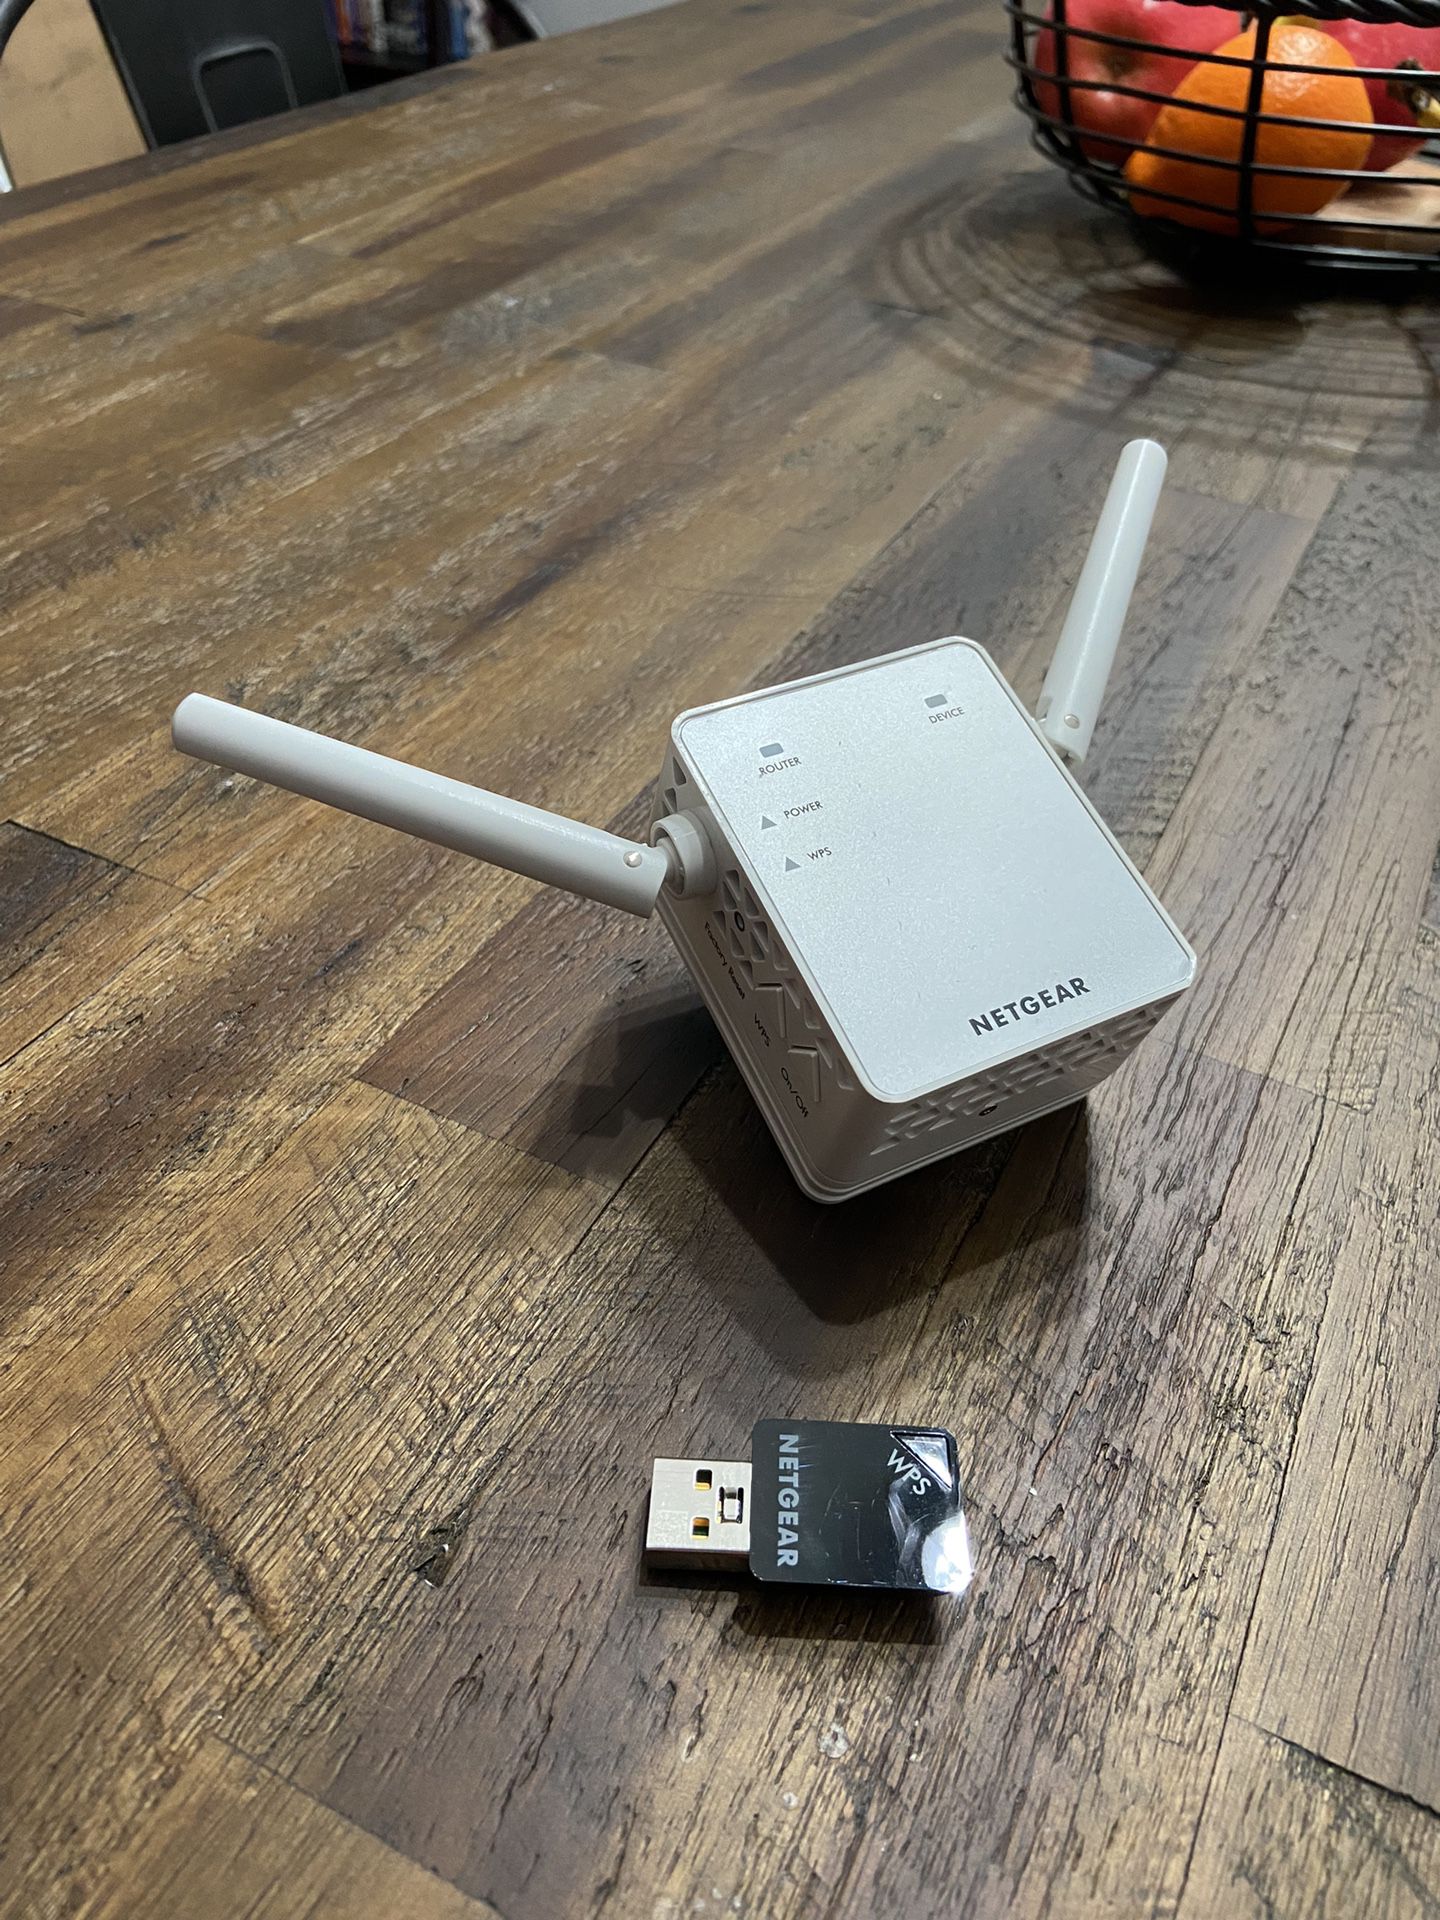 Netgear Wifi Router USB & Wifi Extender